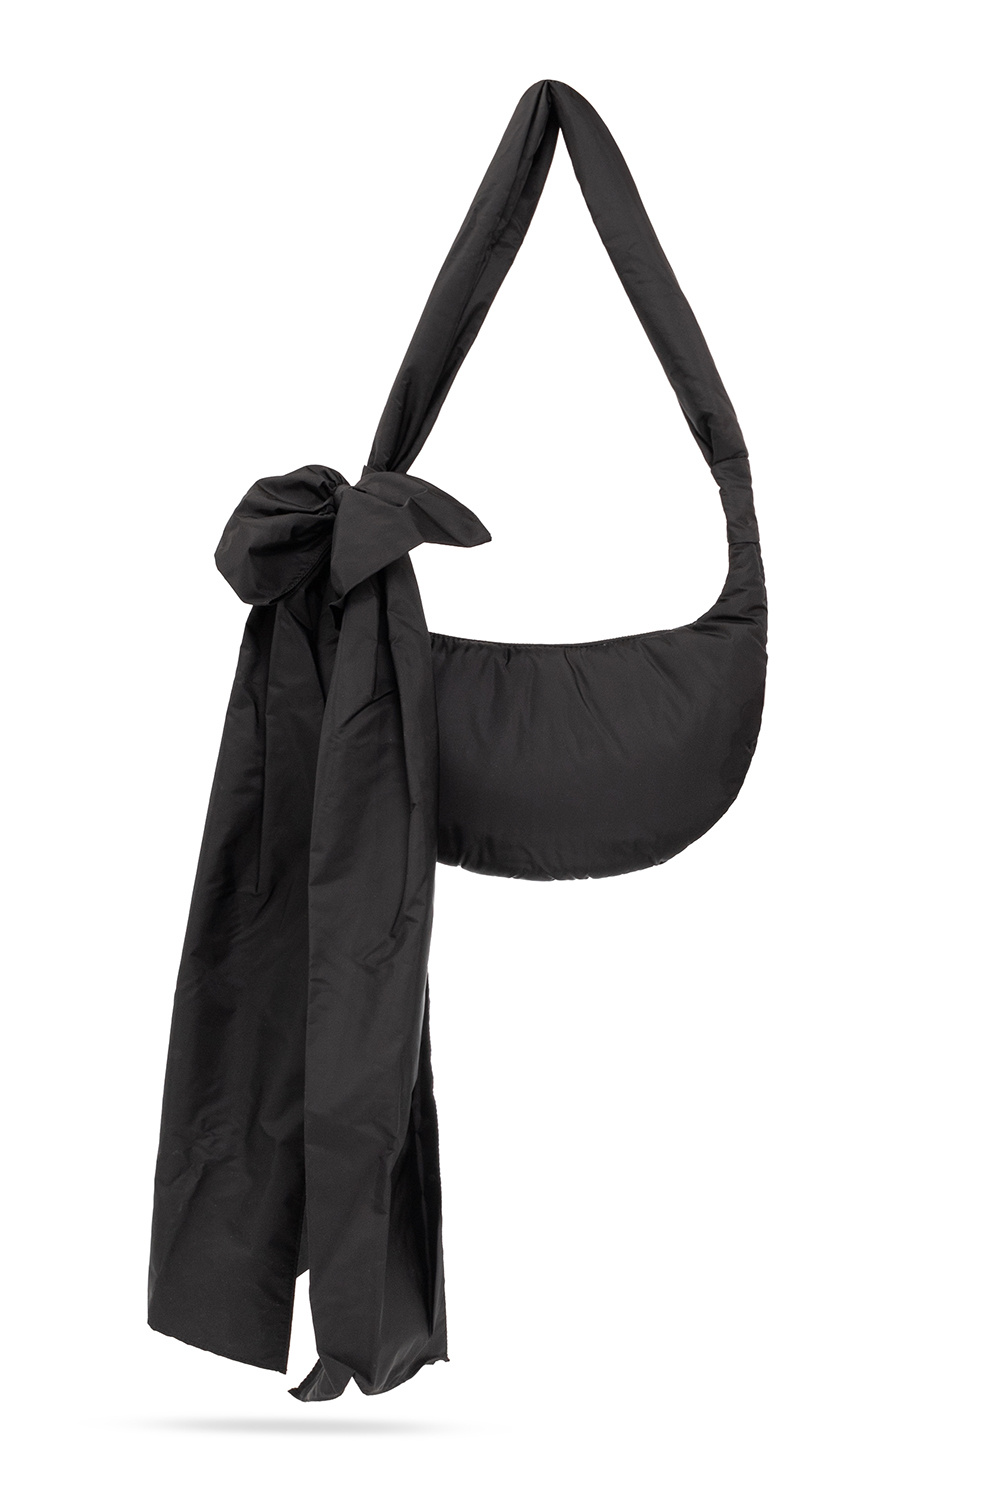 REDValentino KNOT ME UP TOTE BAG - Shoulder Bag for Women